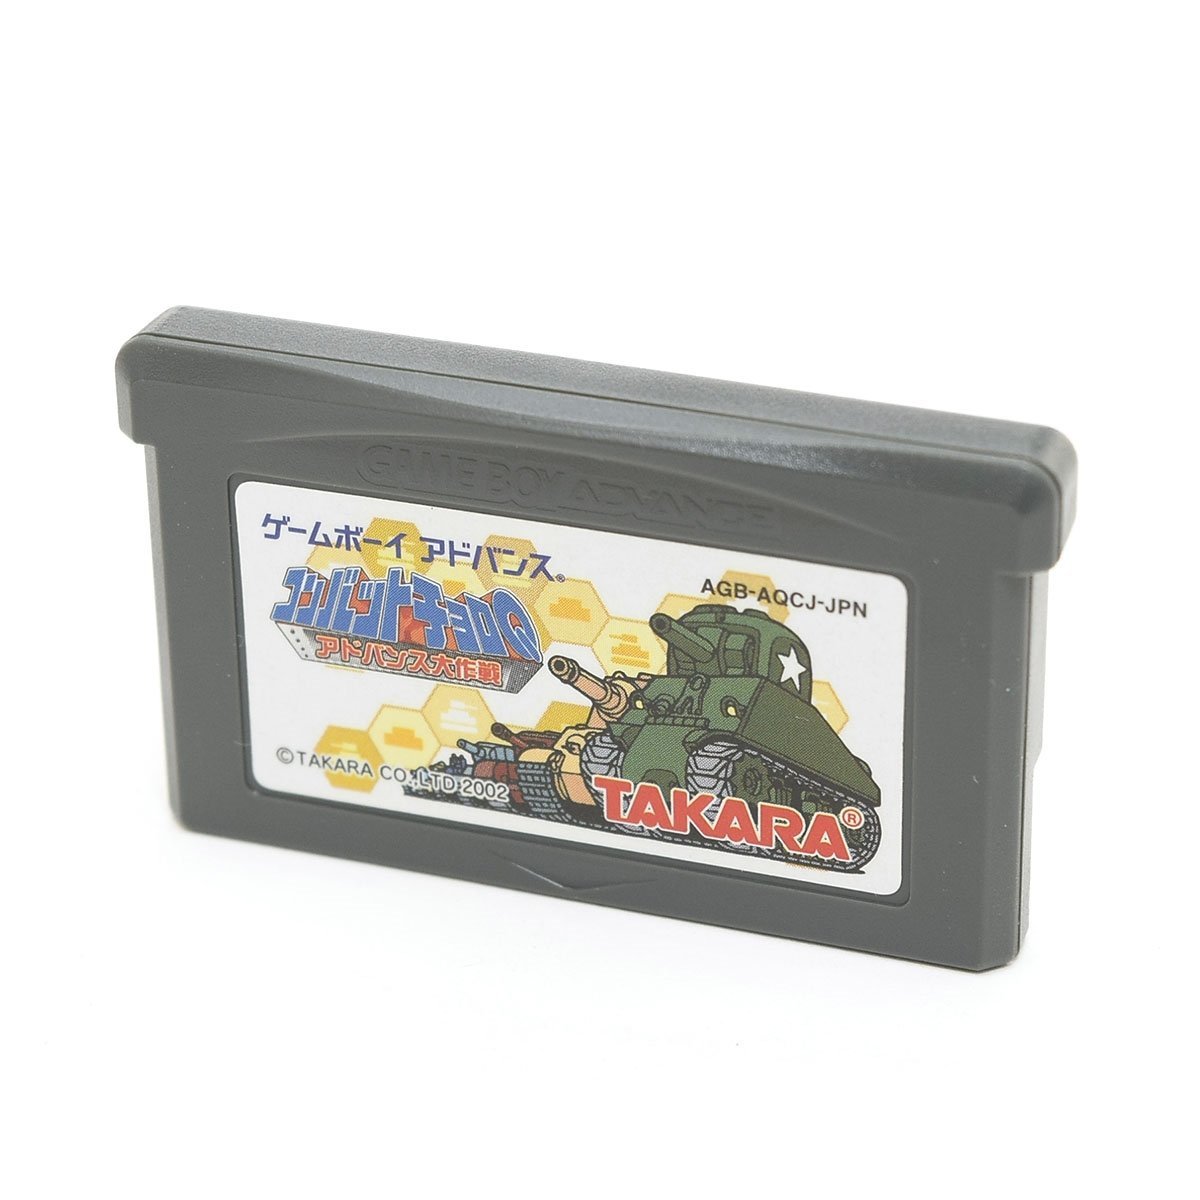 *504701 GBA Combat Choro Q advance Daisaku war the first times limitation version Game Boy Advance knight. Tiger II